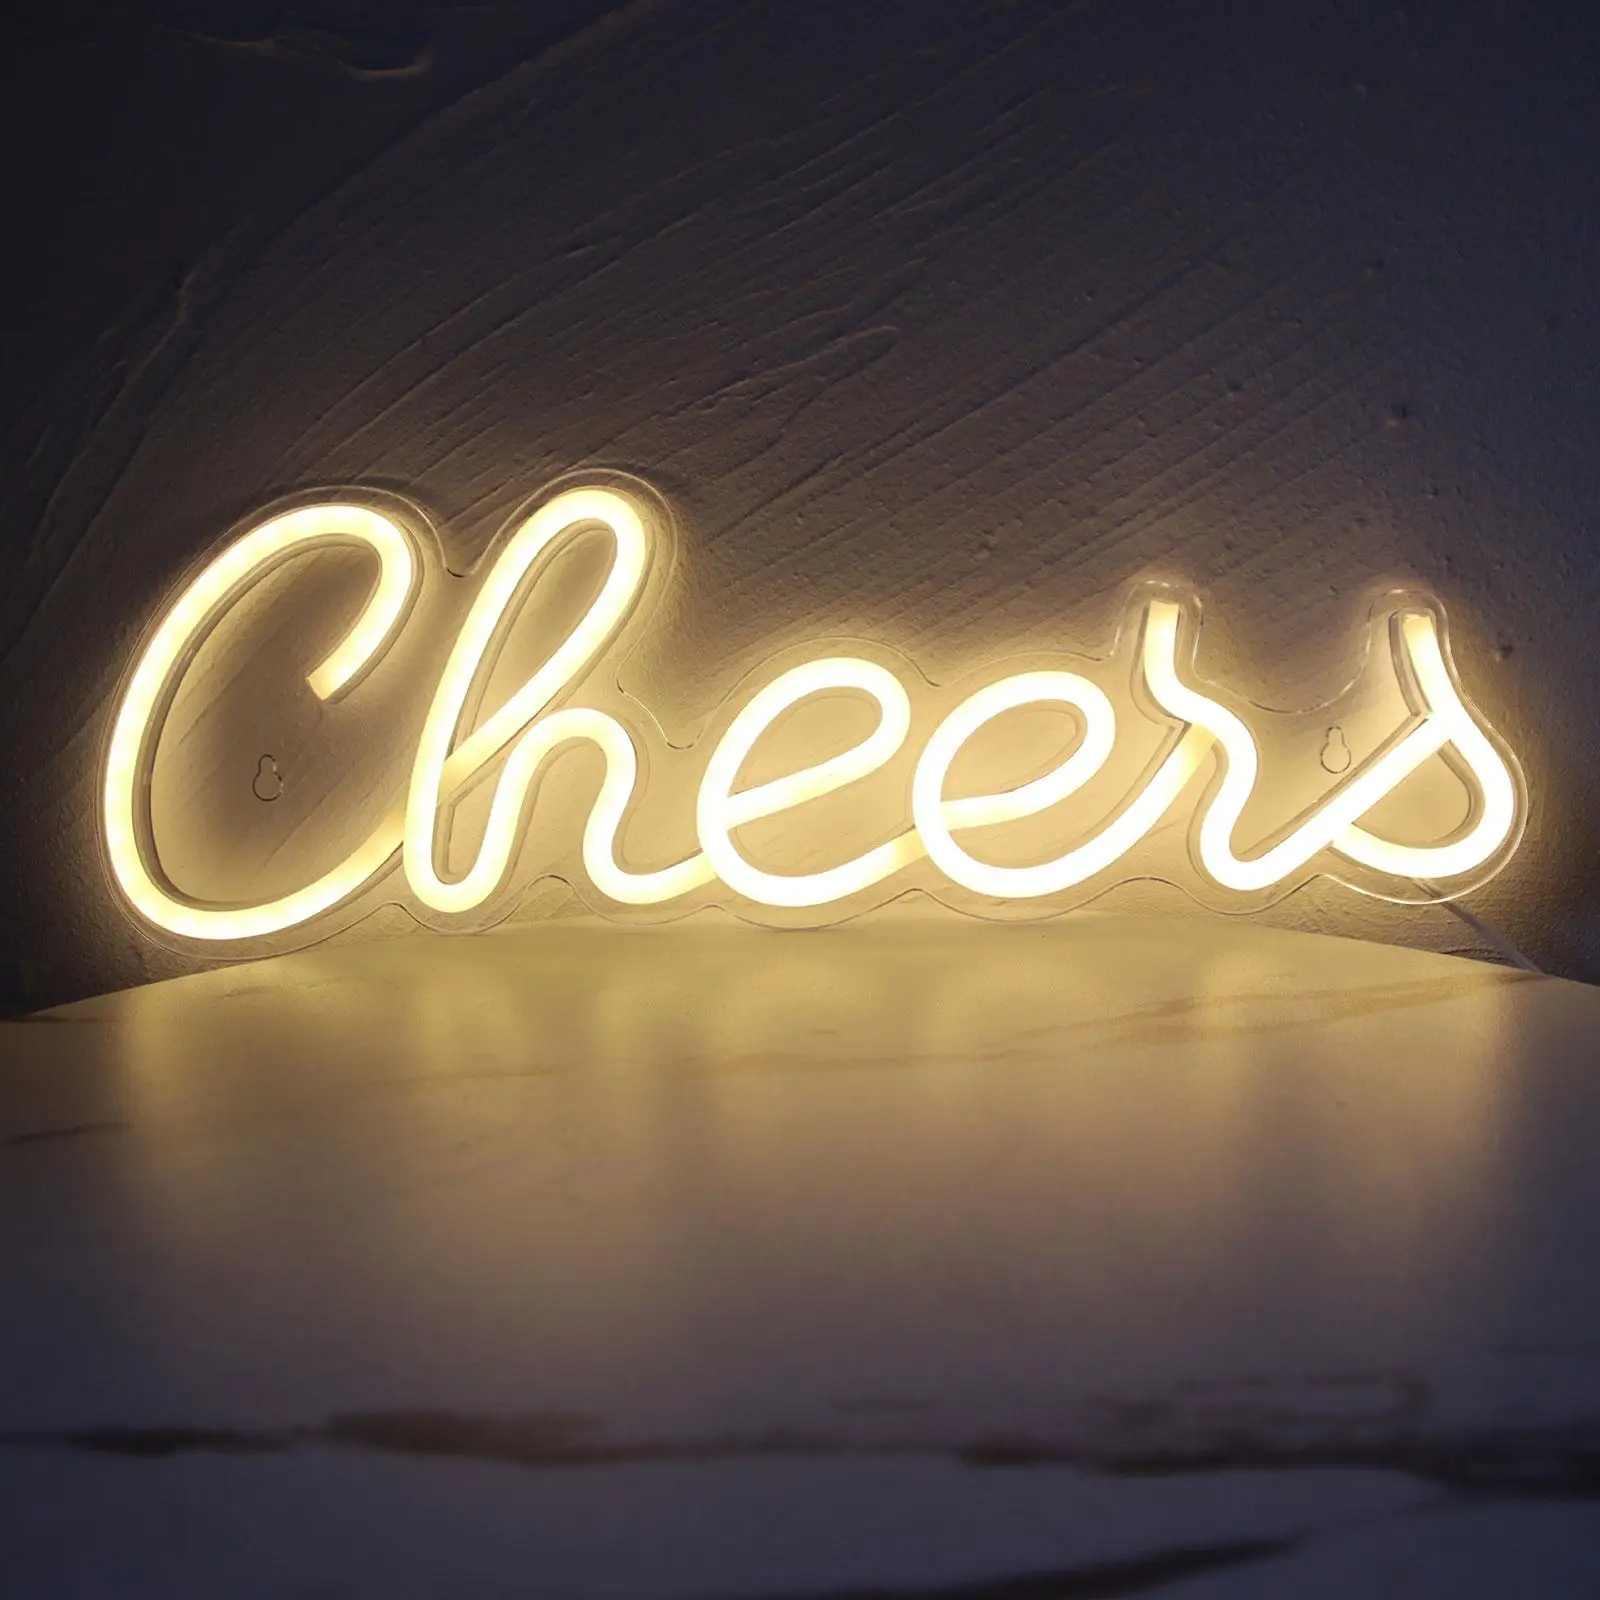 Cheers LED Sign Lighting Light Neon Lights Peach Decorative